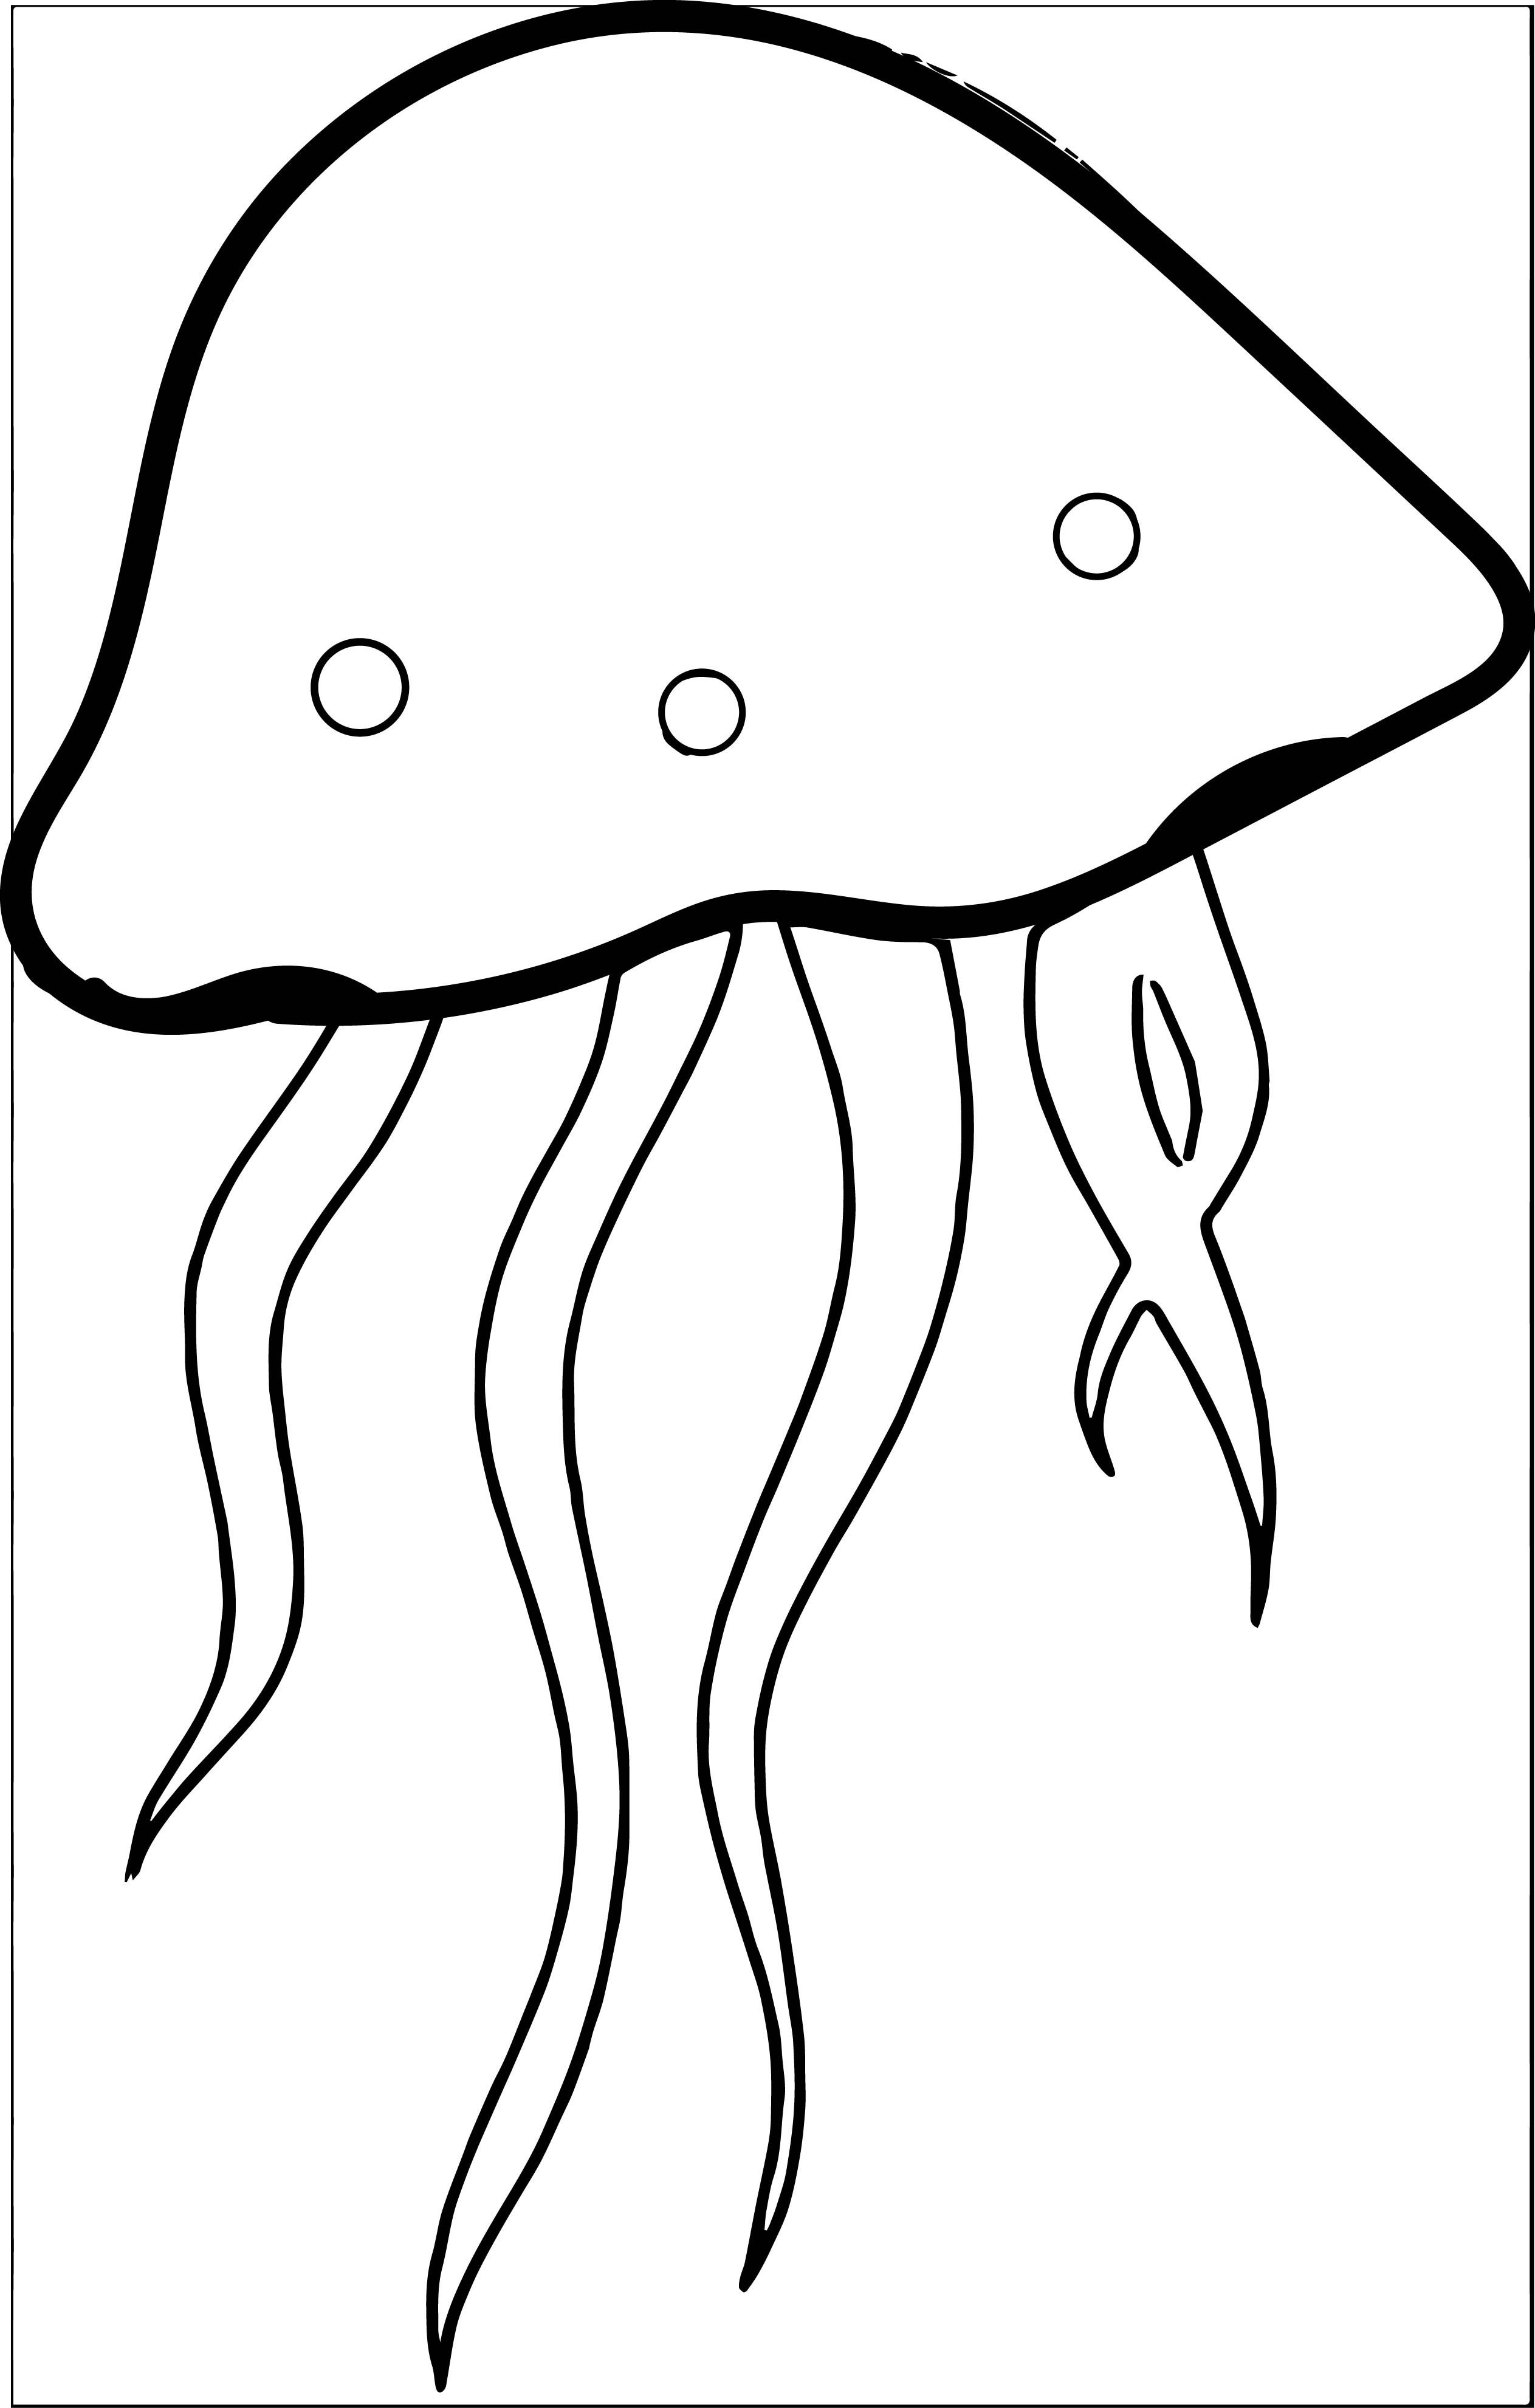 Jellyfish clipart clip.